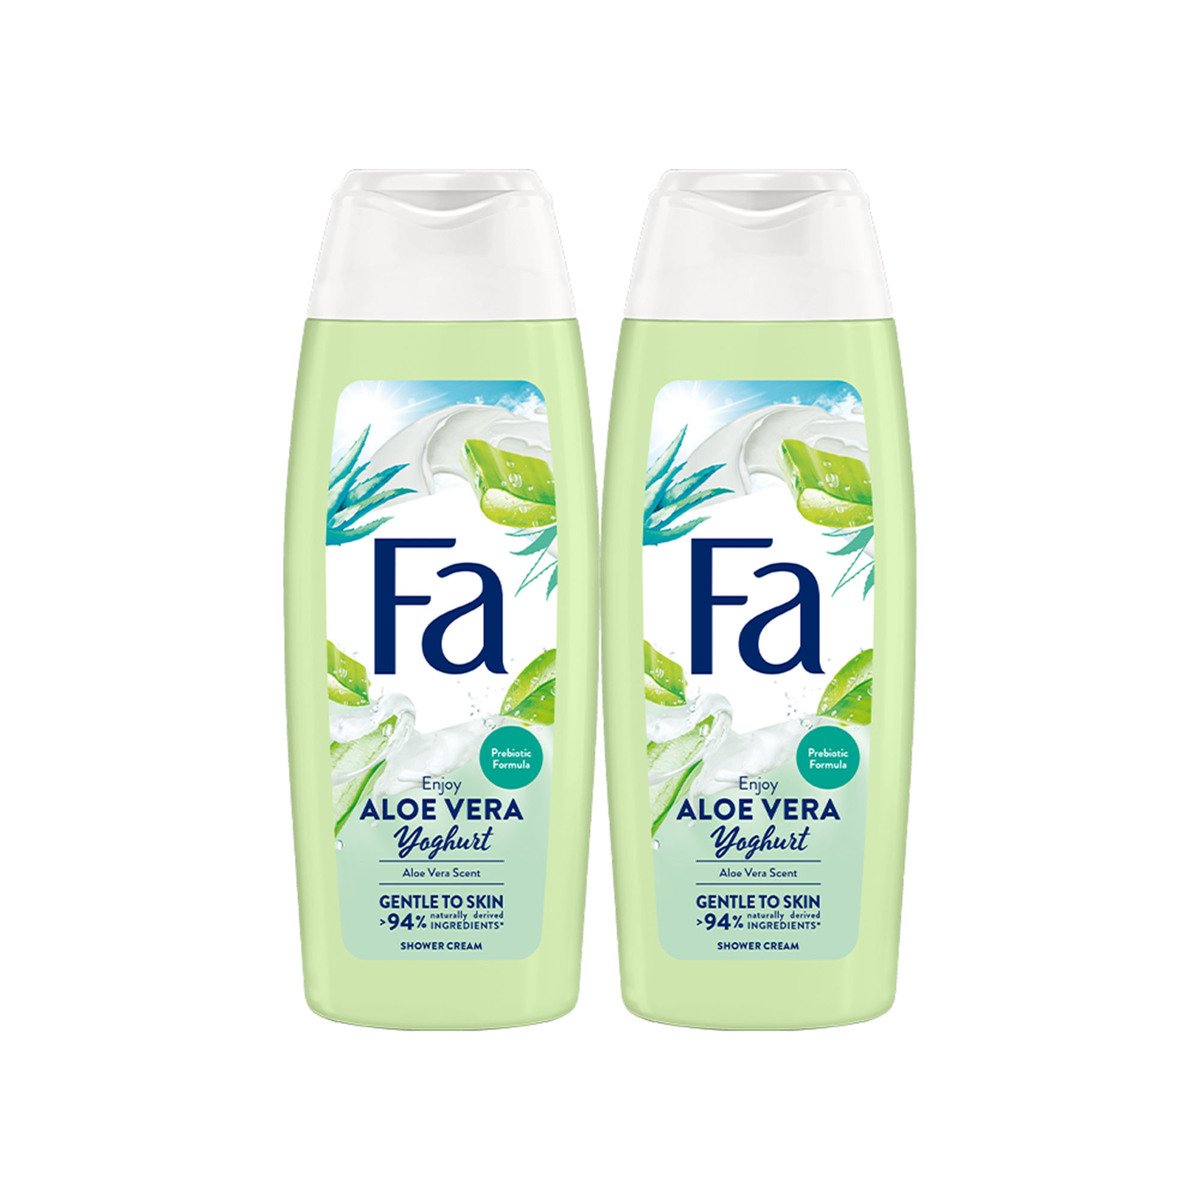 Fa Aloe Vera Yoghurt Shower Cream Value Pack 2 x 250 ml